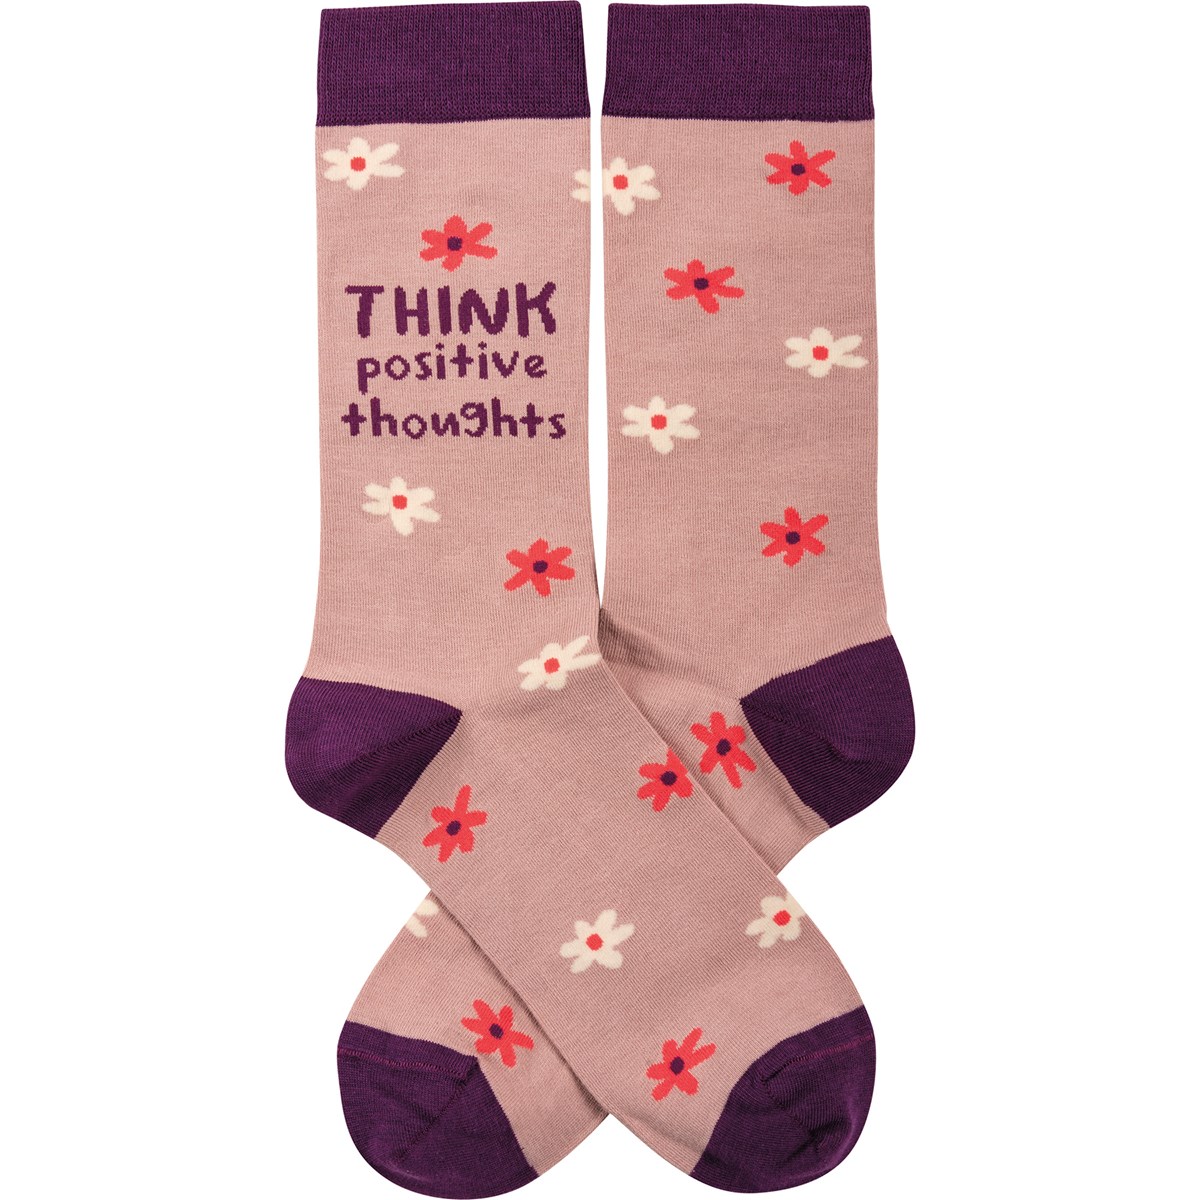 Think Positive Thoughts Socks - Cotton, Nylon, Spandex